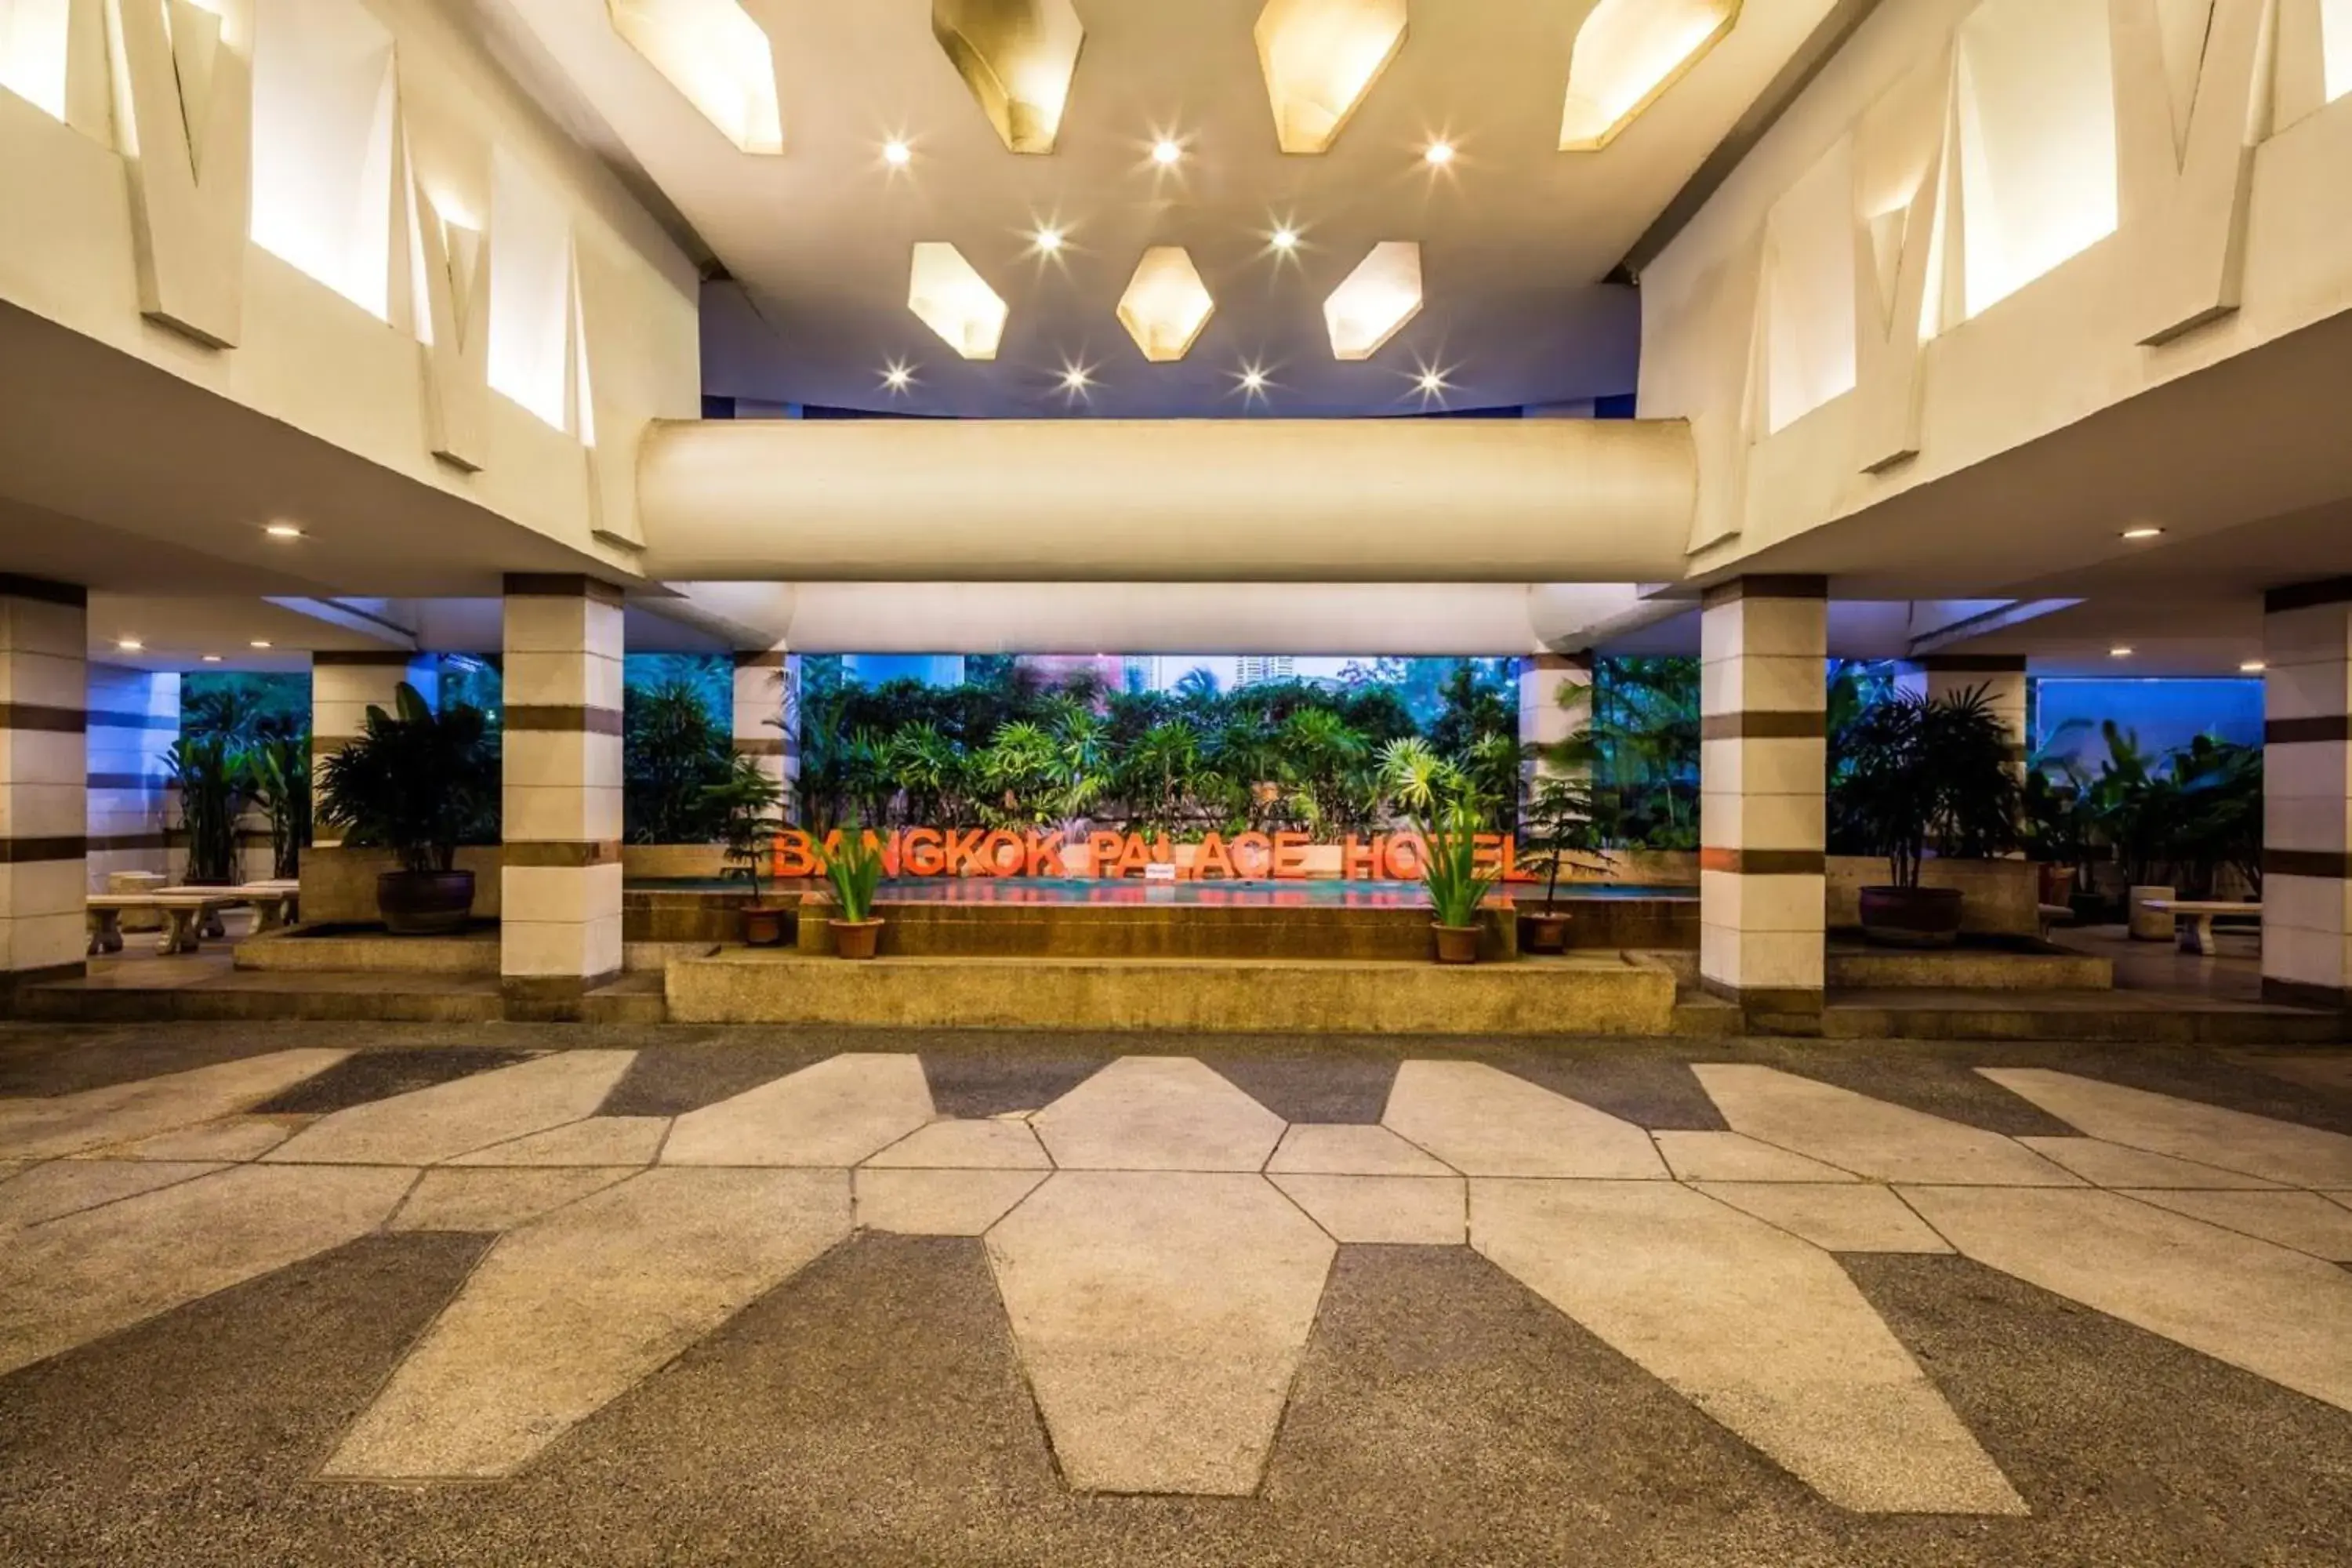 Lobby or reception in Bangkok Palace Hotel